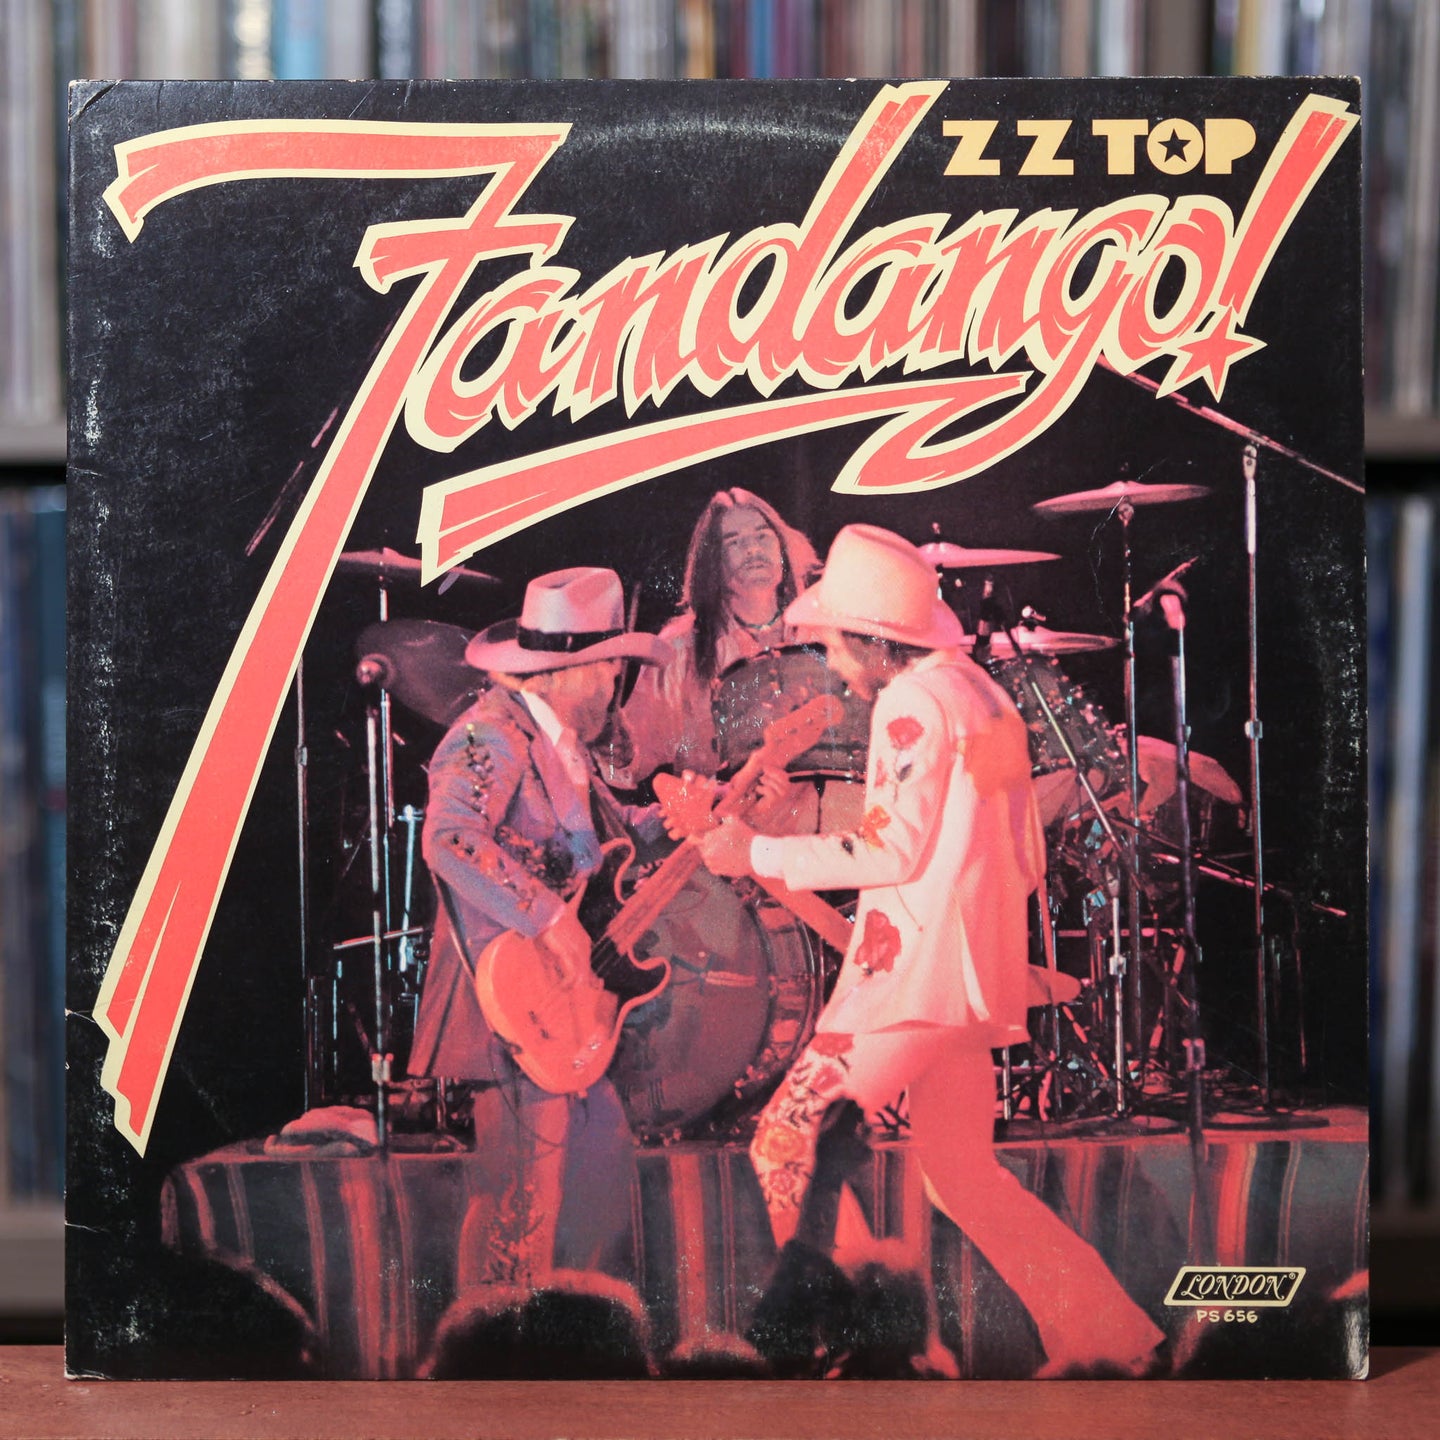 ZZ Top - Fandango! - 1975 London, VG+/VG